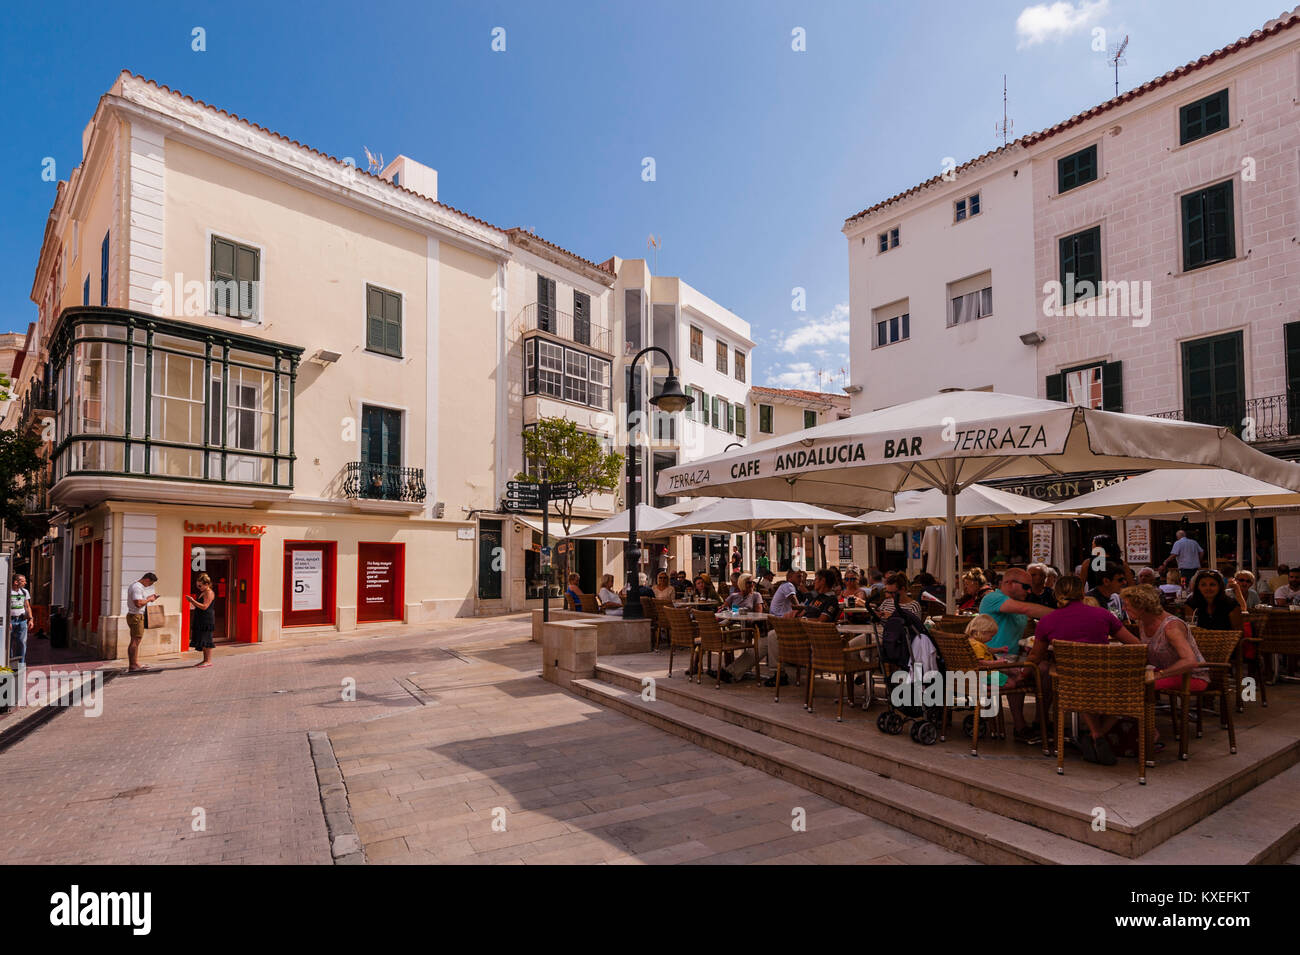 Menschen sitzen in einer Bar Cafe in Mahon, Menorca, Balearen, Spanien Stockfoto